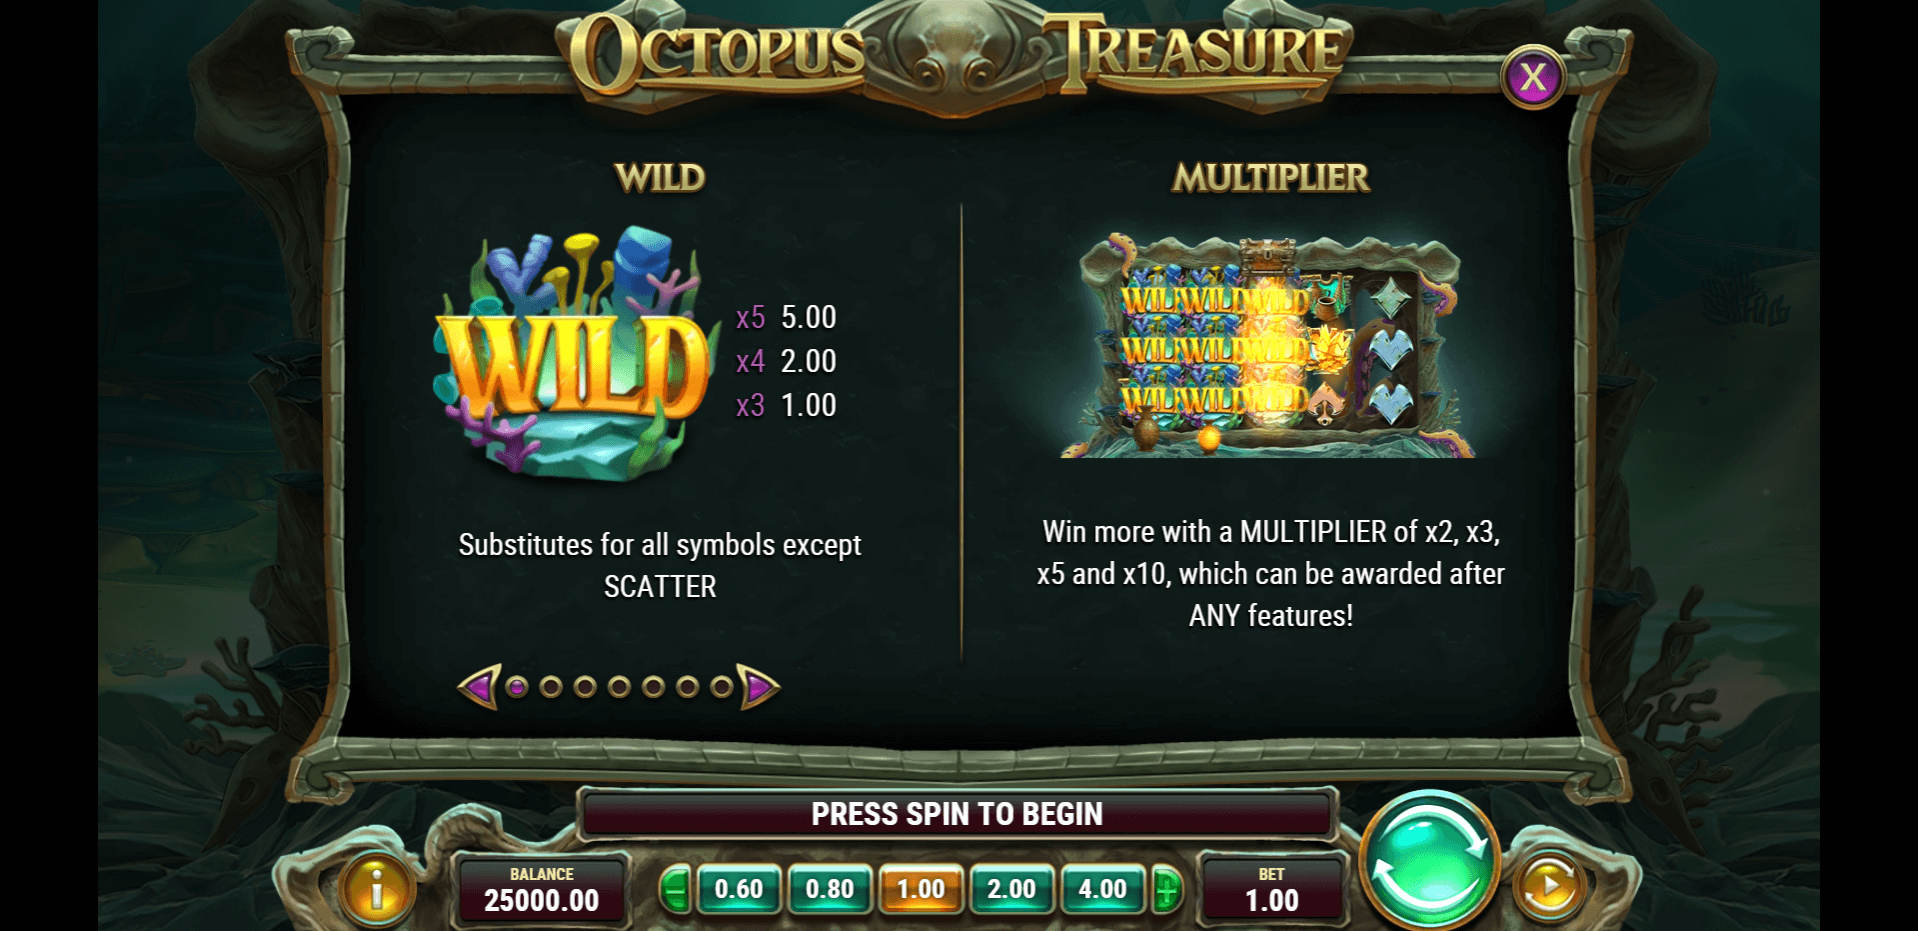 octopus treasure slot machine detail image 0